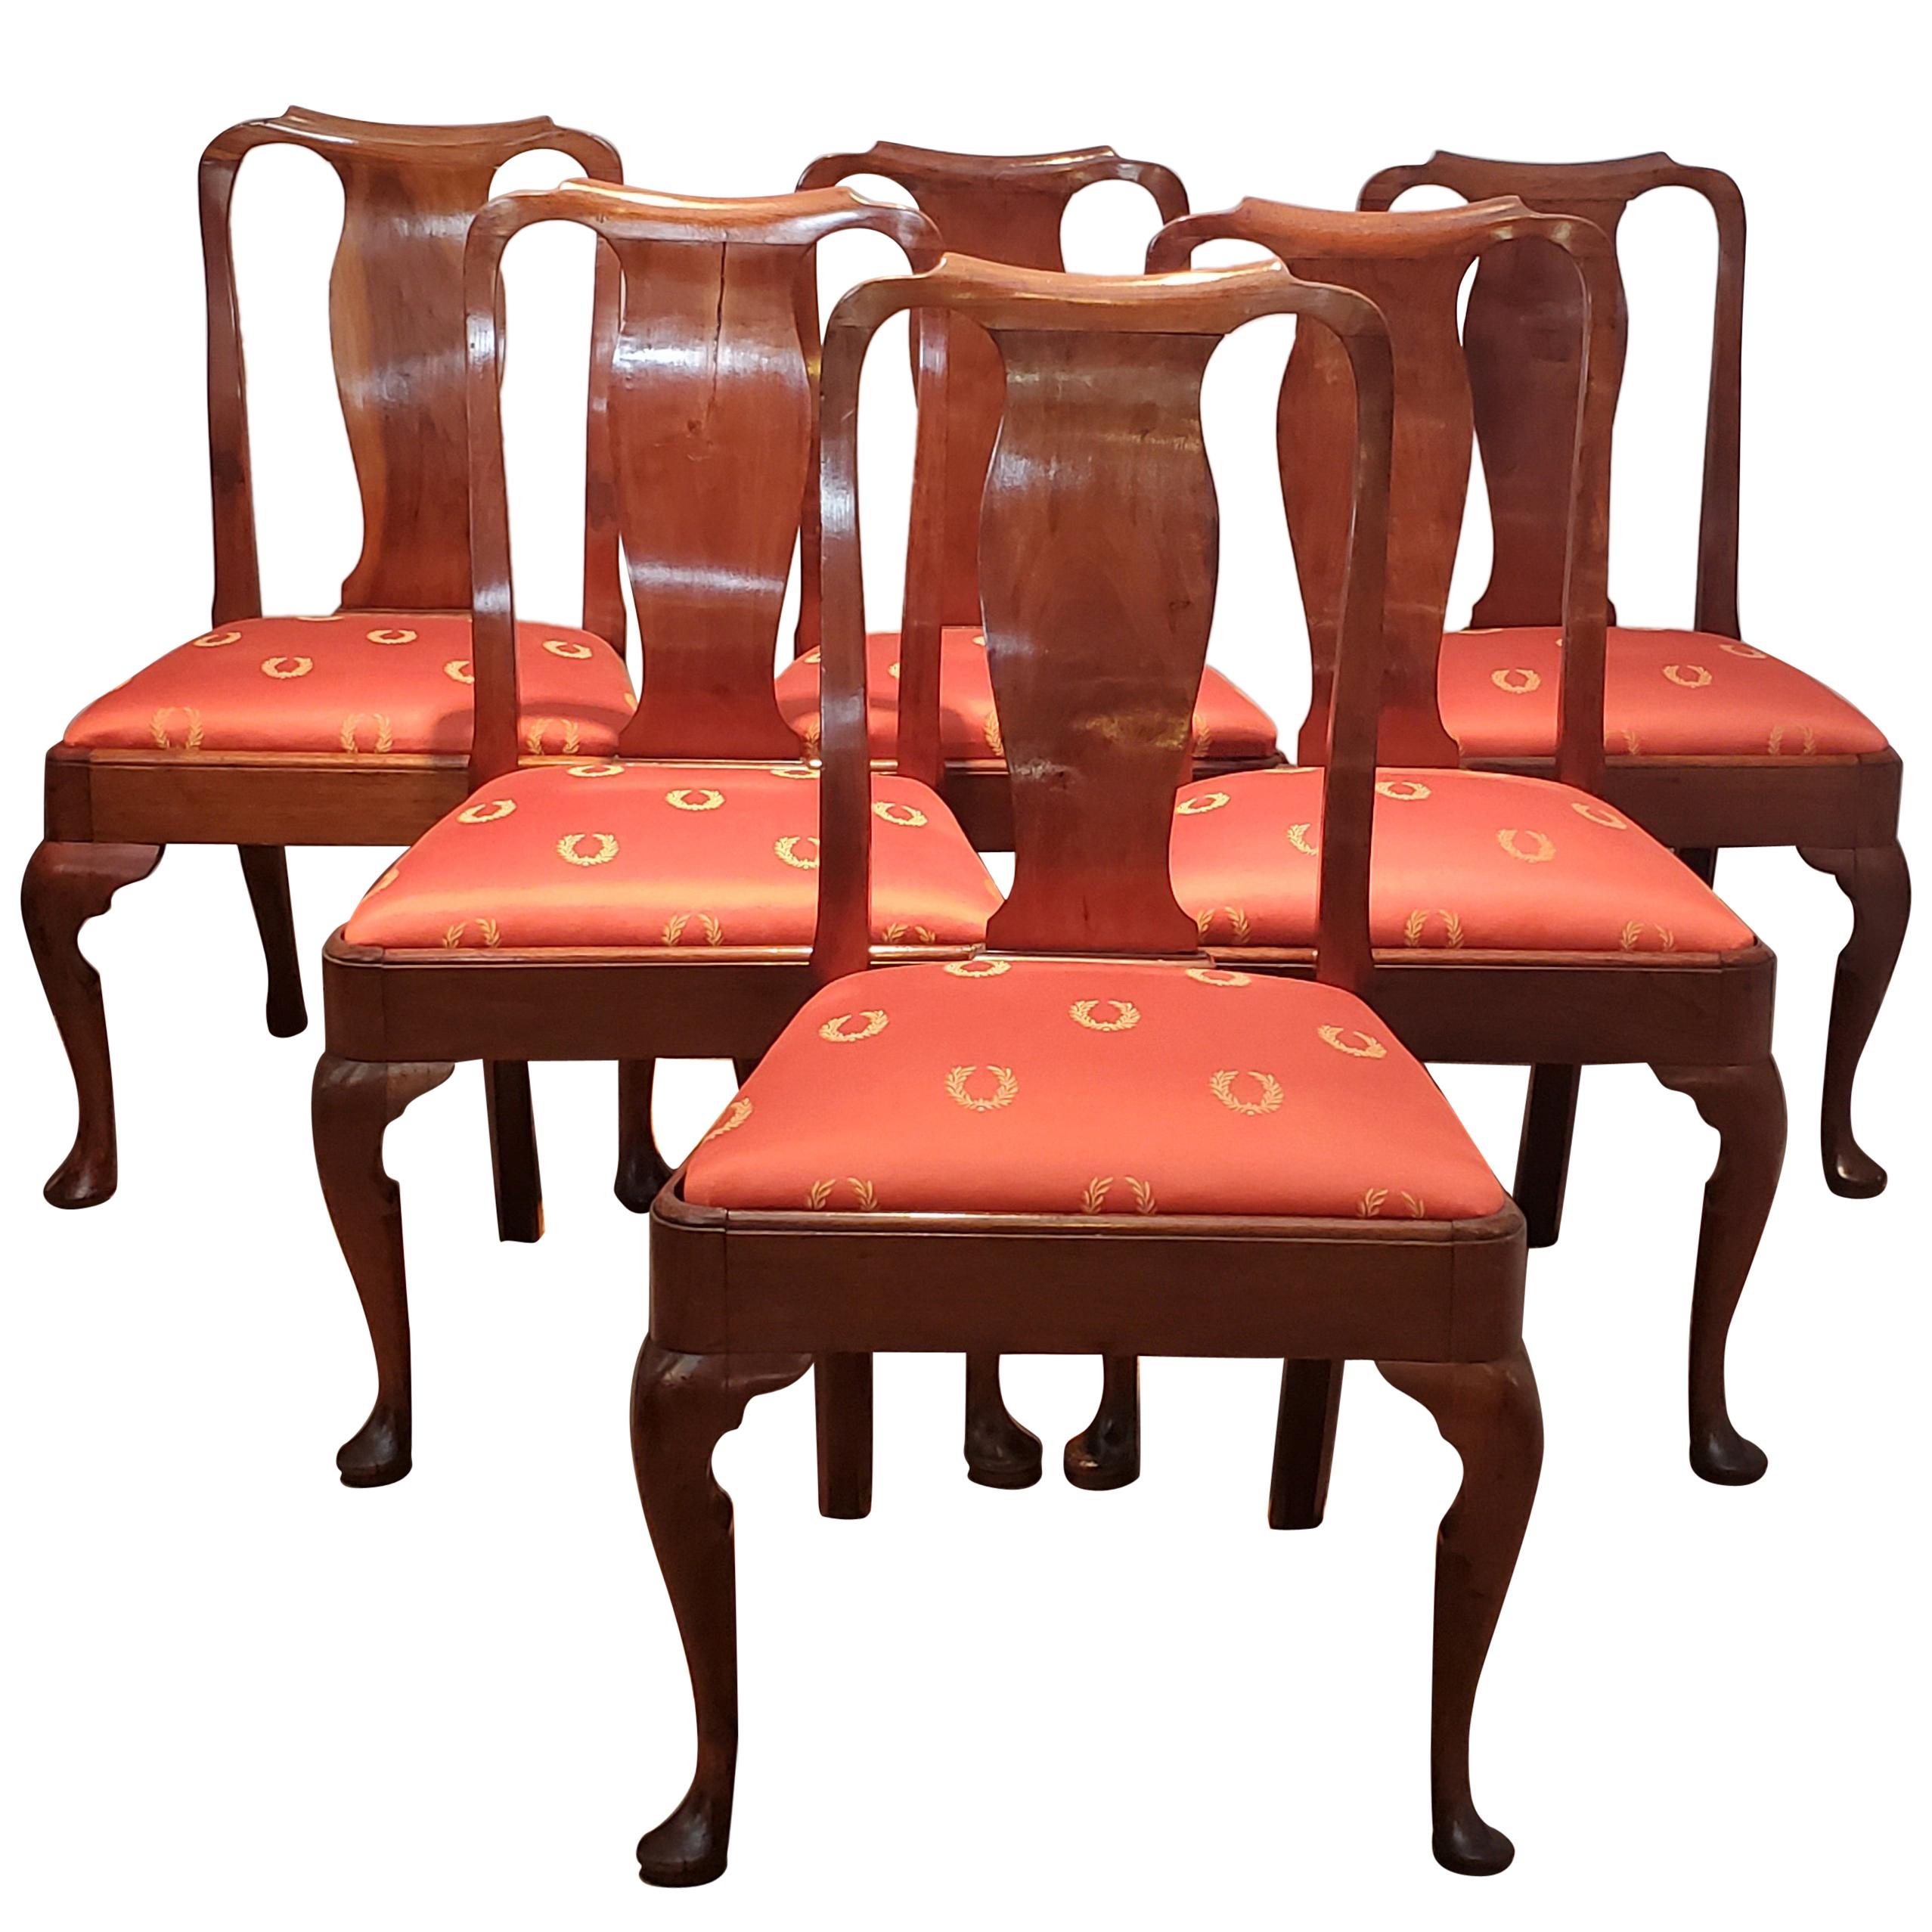 Set of Six Walnut Dining Chairs England, circa 1750s